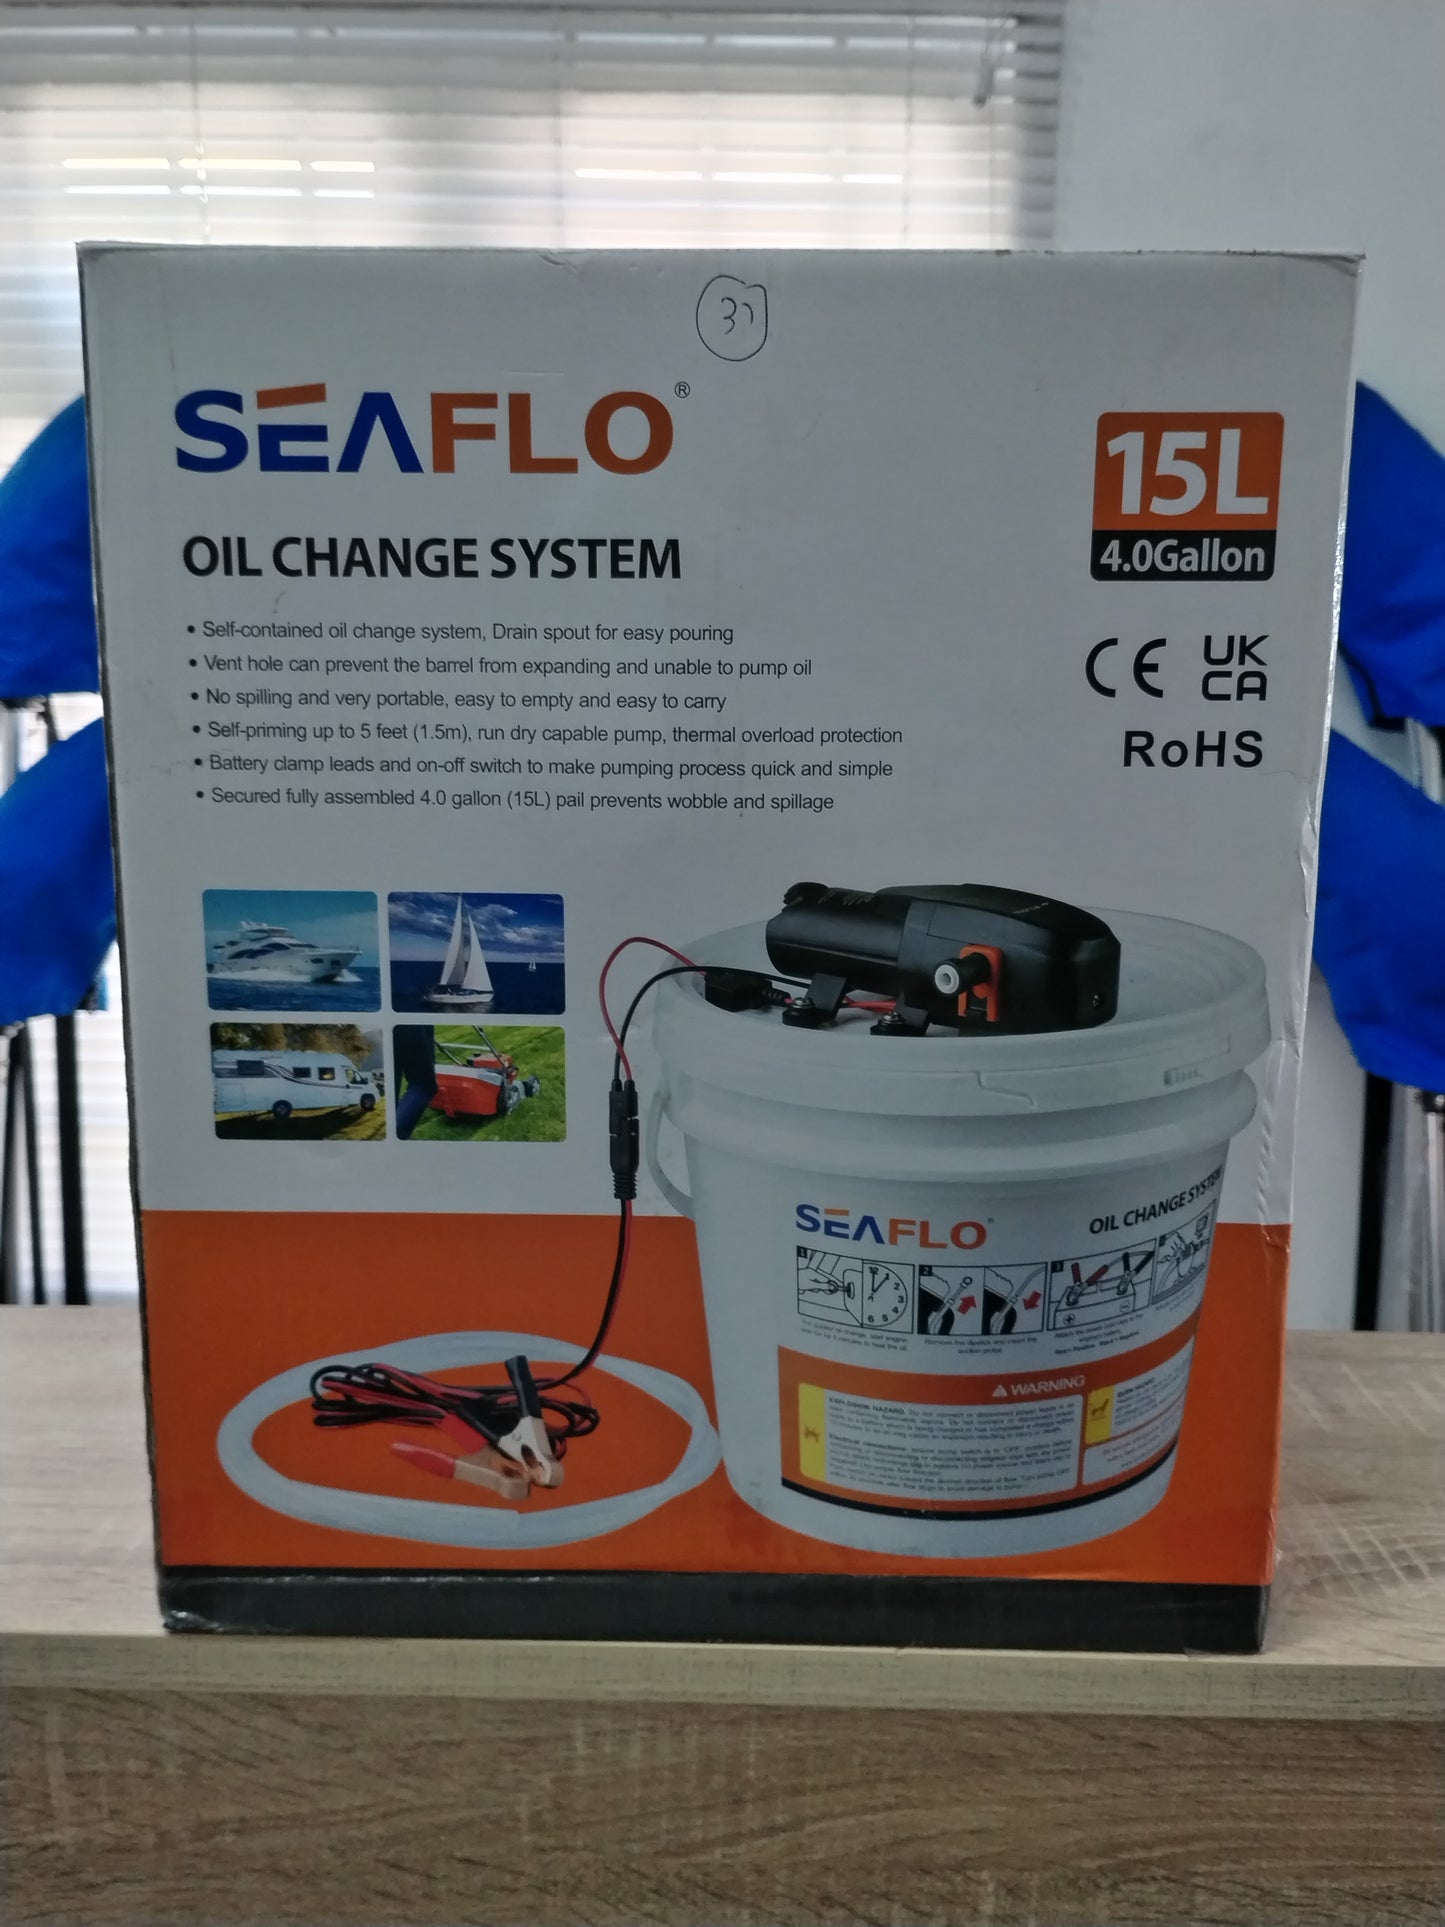 Seaflo Oil Change System